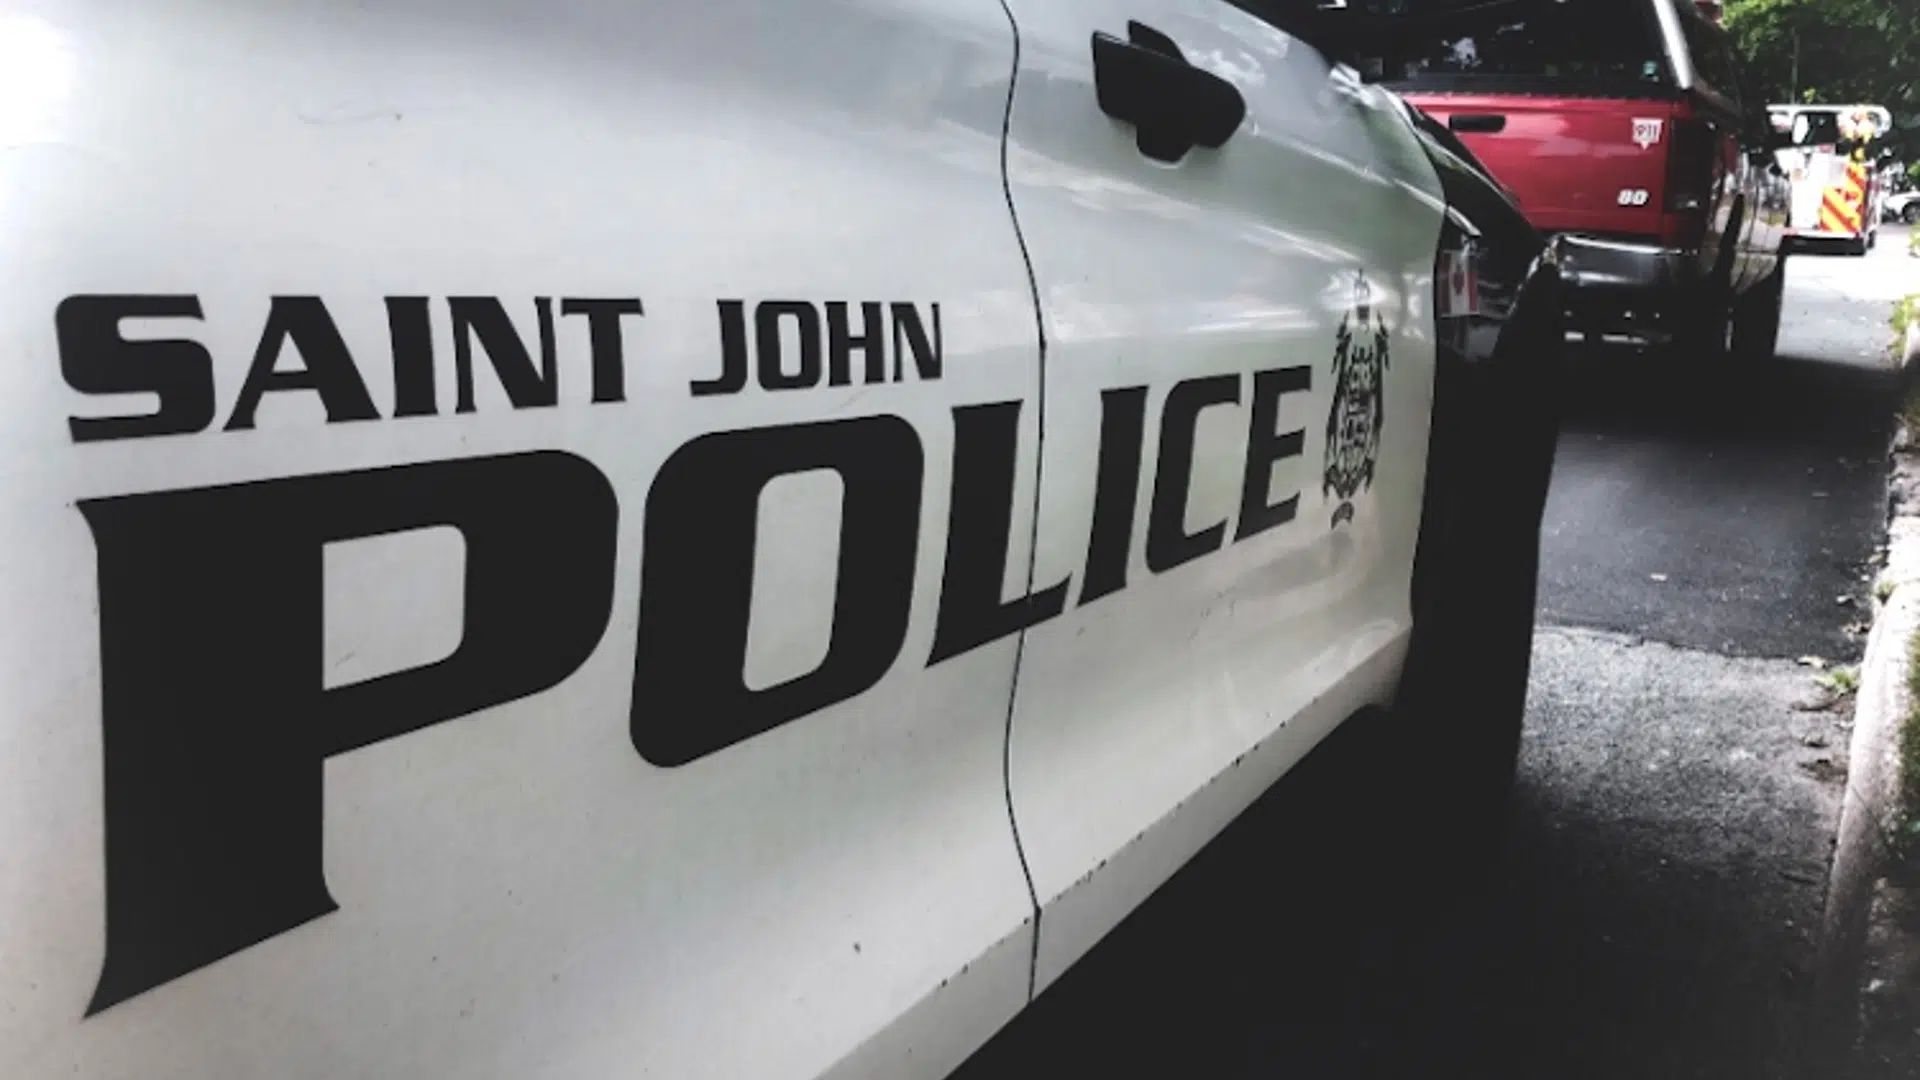 Stolen vehicle, dog recovered in Saint John